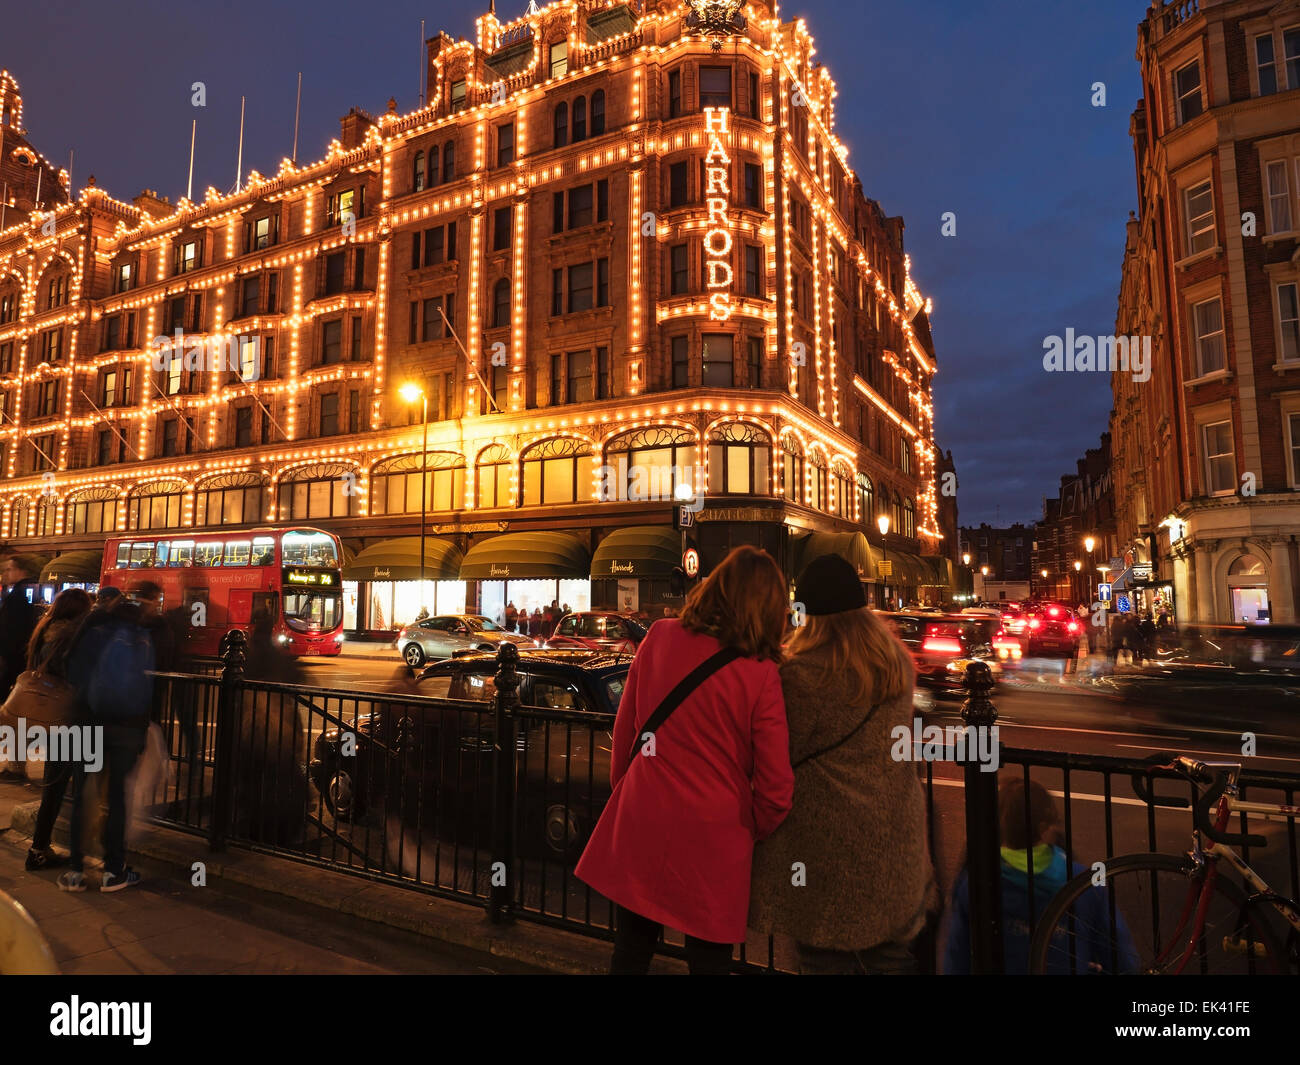 Tourists viewing Harrods Department Store illuminated at Night, Brompton Road, Knightsbridge, Royal Borough of Kensington and Chelsea, London, England Stock Photo